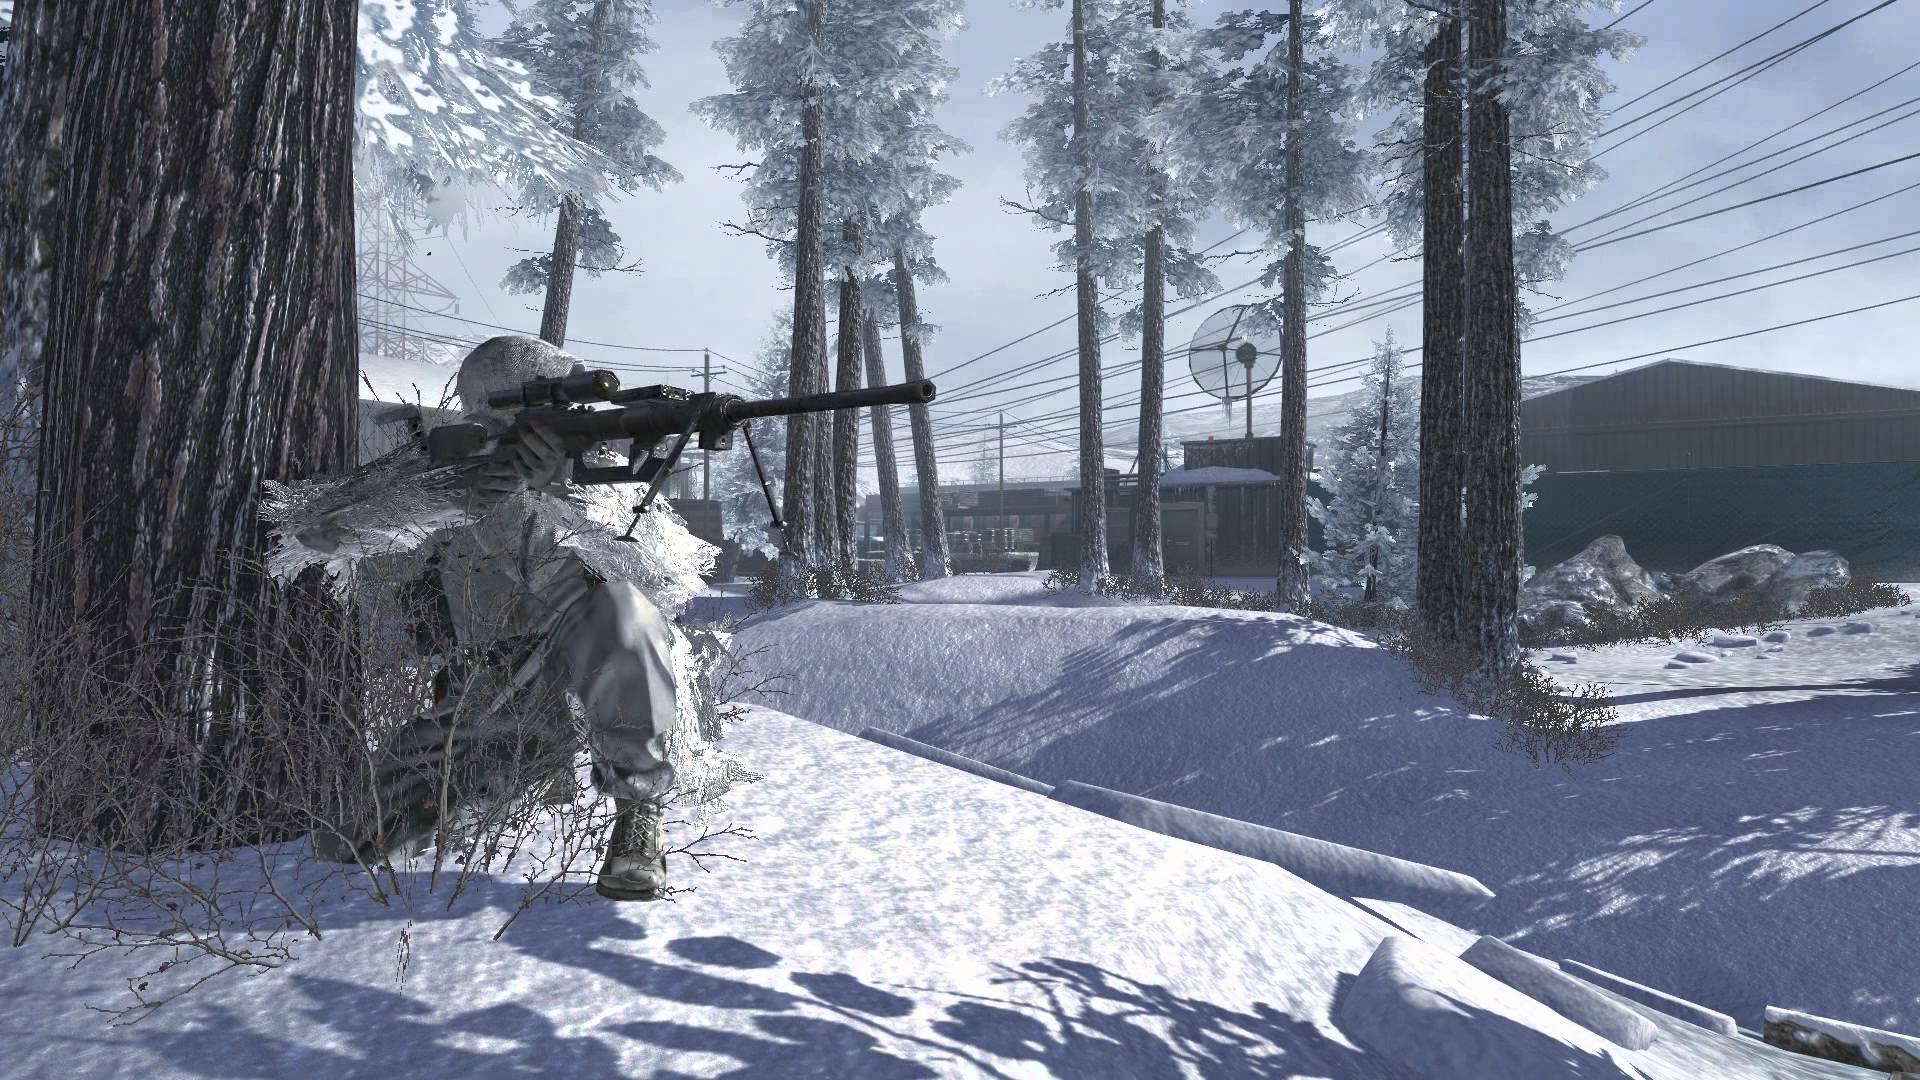 Modern Warfare 2 Sniper Dreamscene Video Wallpaper